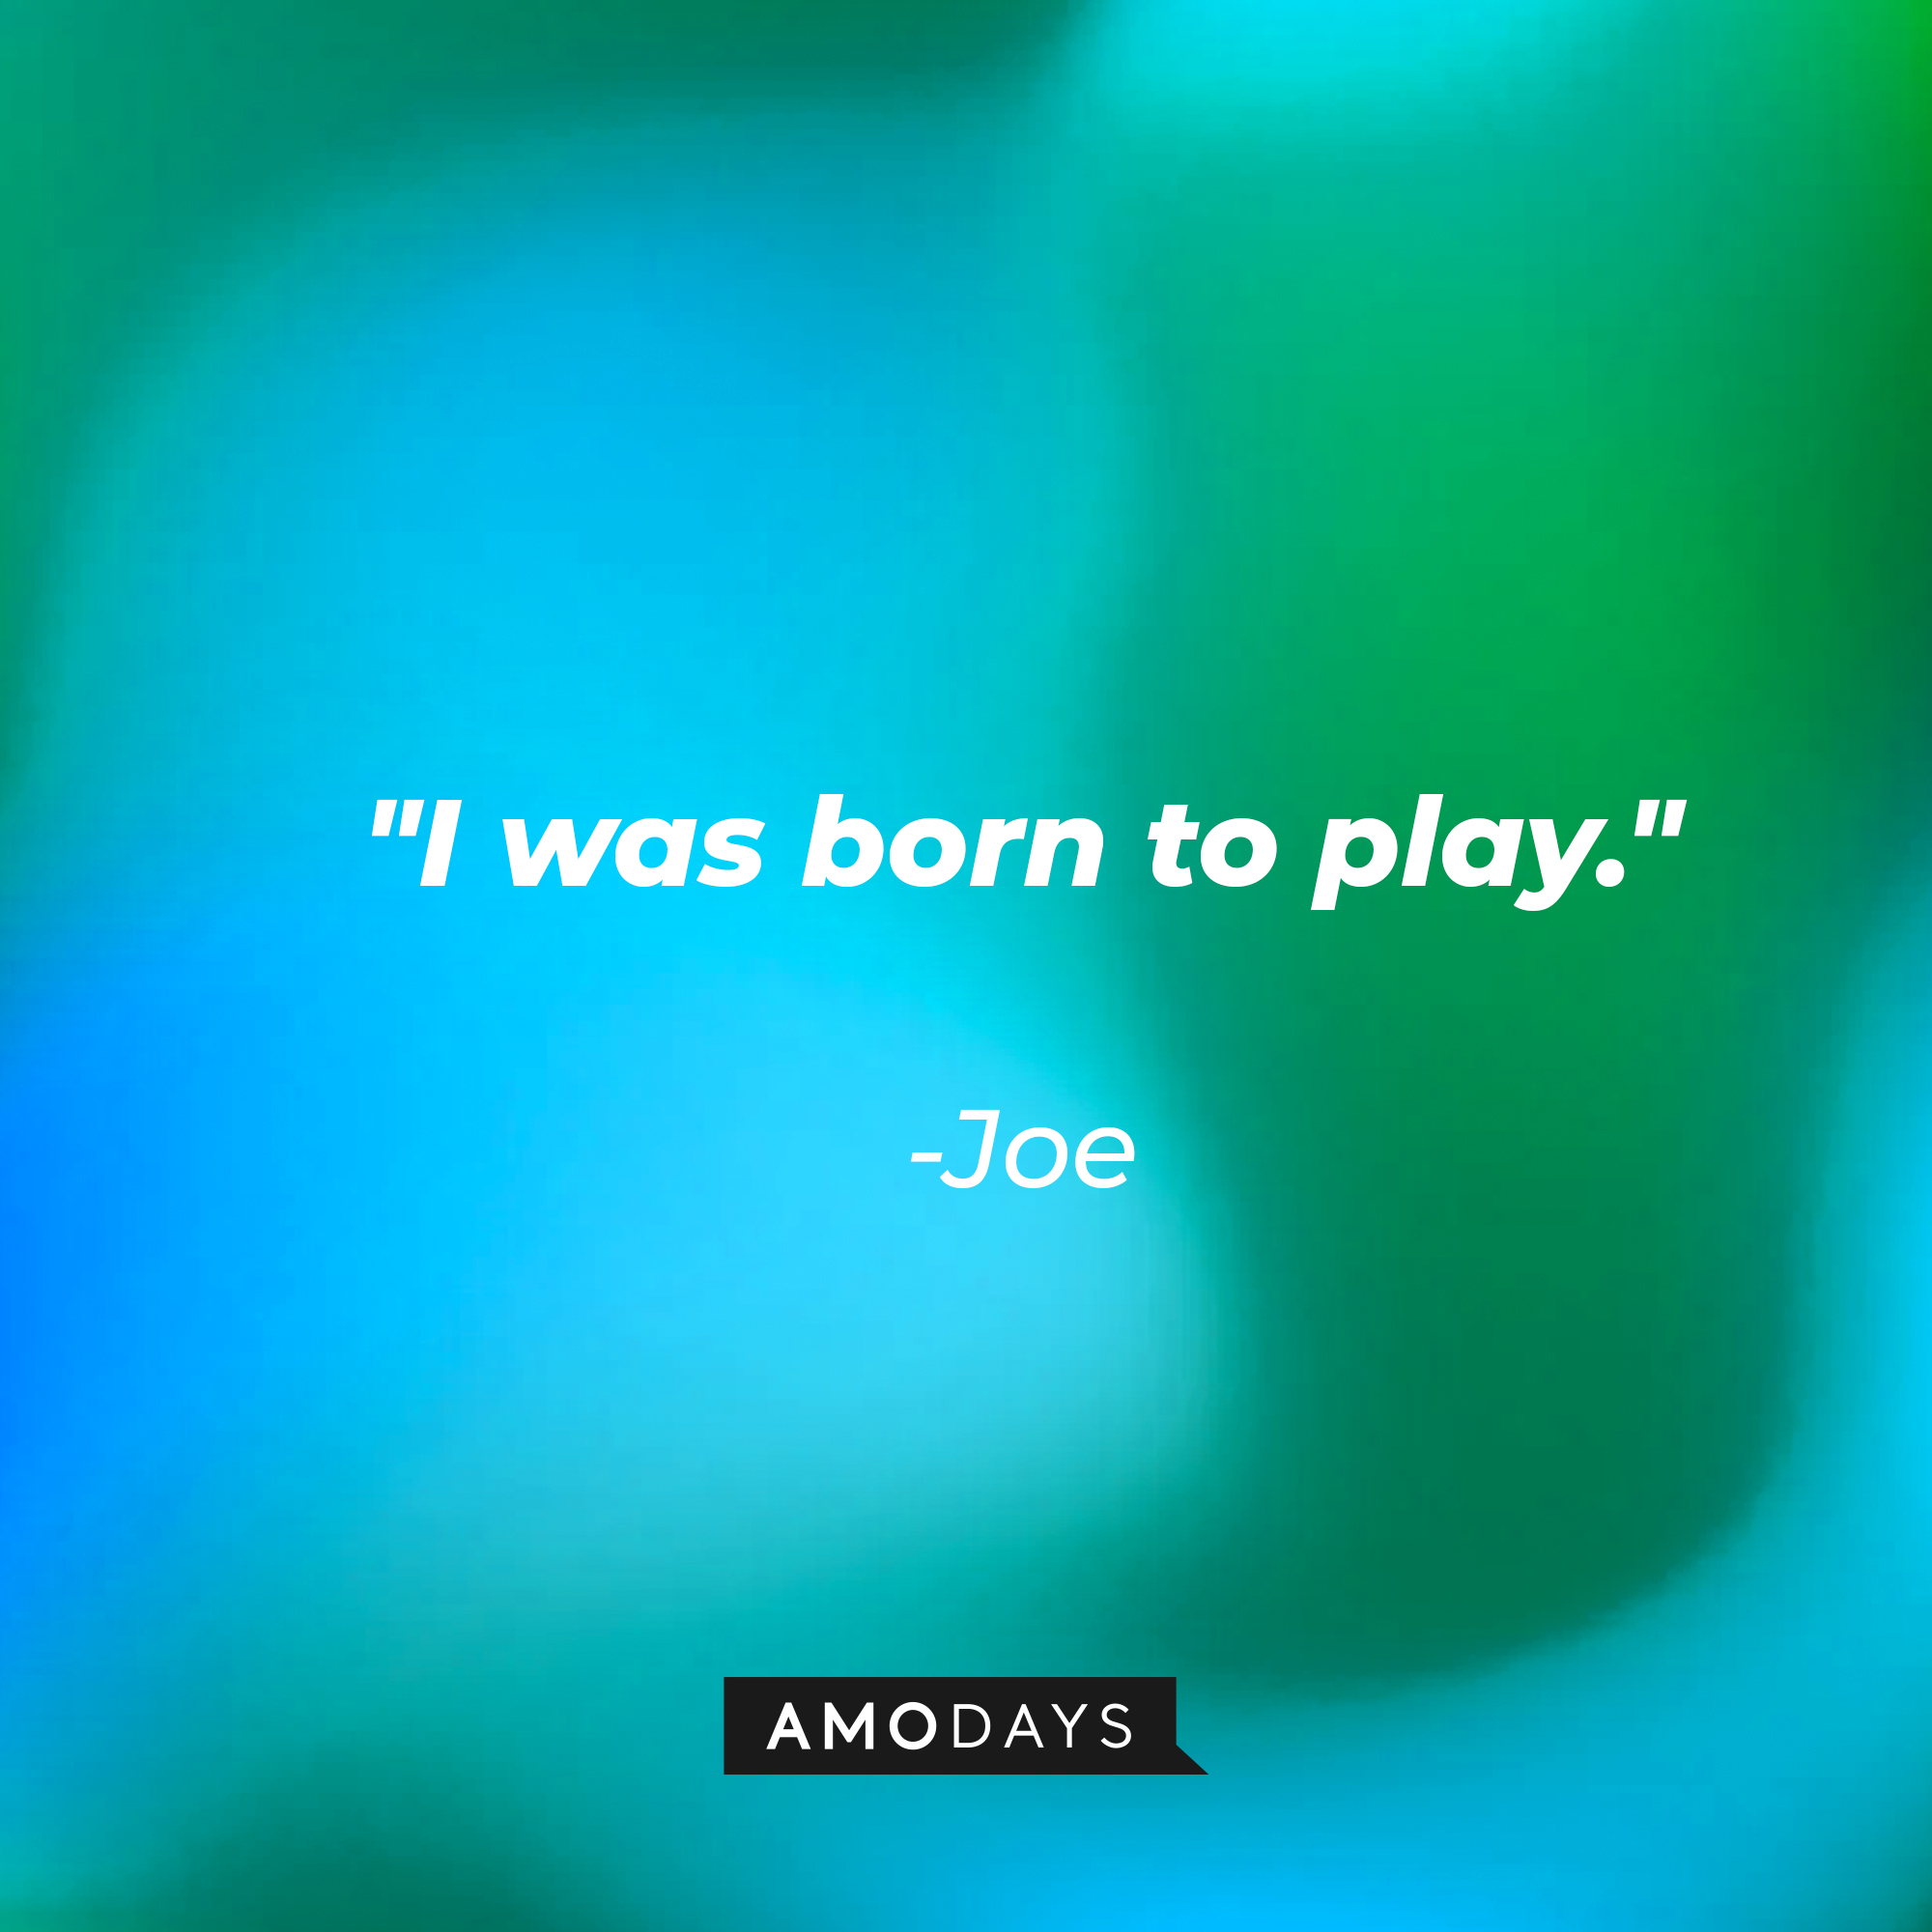 Joe's quote: "I was born to play." | Source: youtube.com/pixar